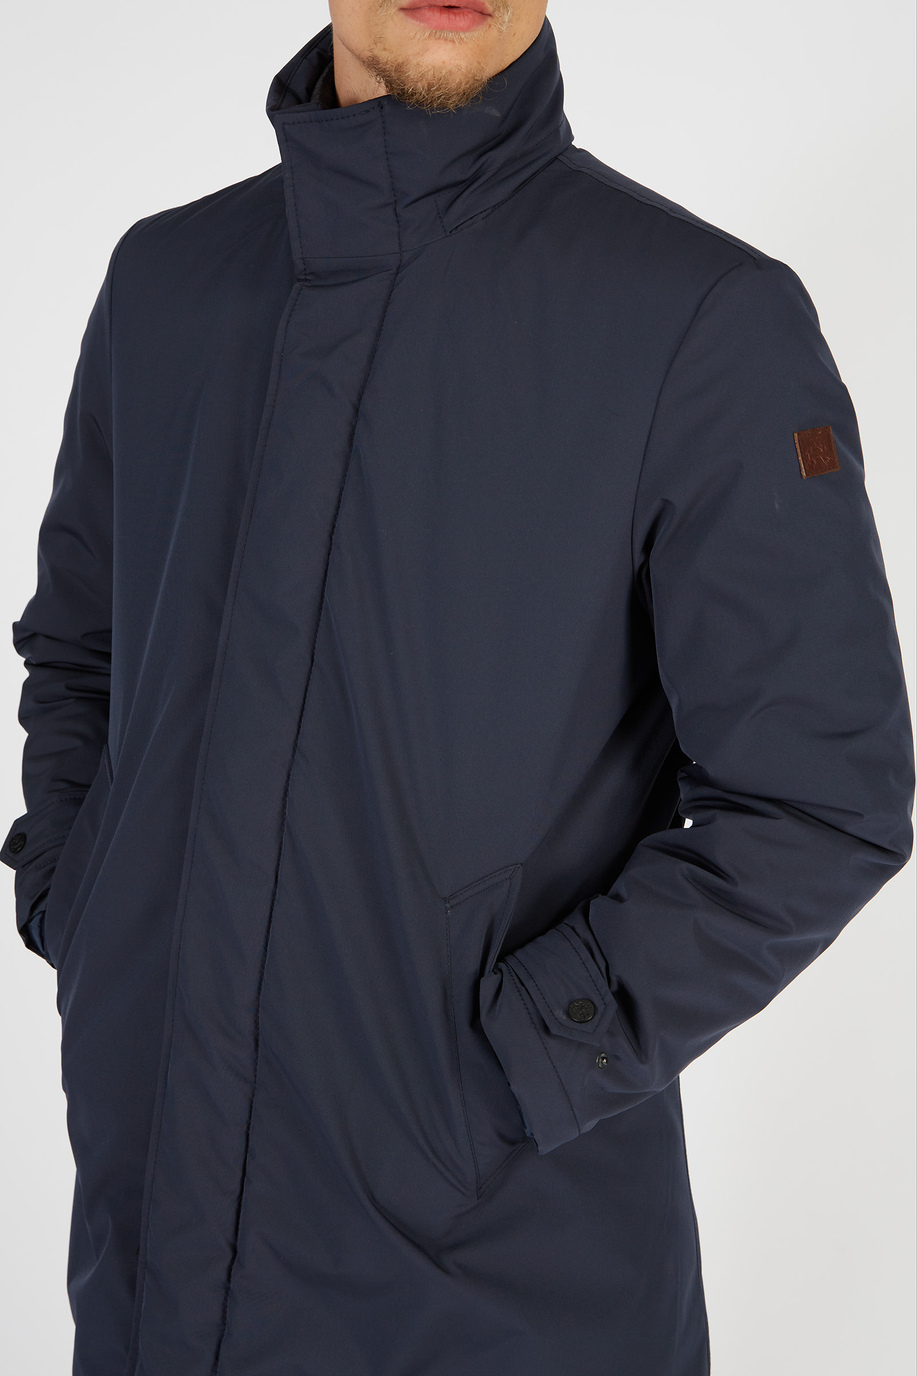 Herren Blue Ribbon Jacke aus Nylon mit normaler Passform - Oberbekleidung | La Martina - Official Online Shop